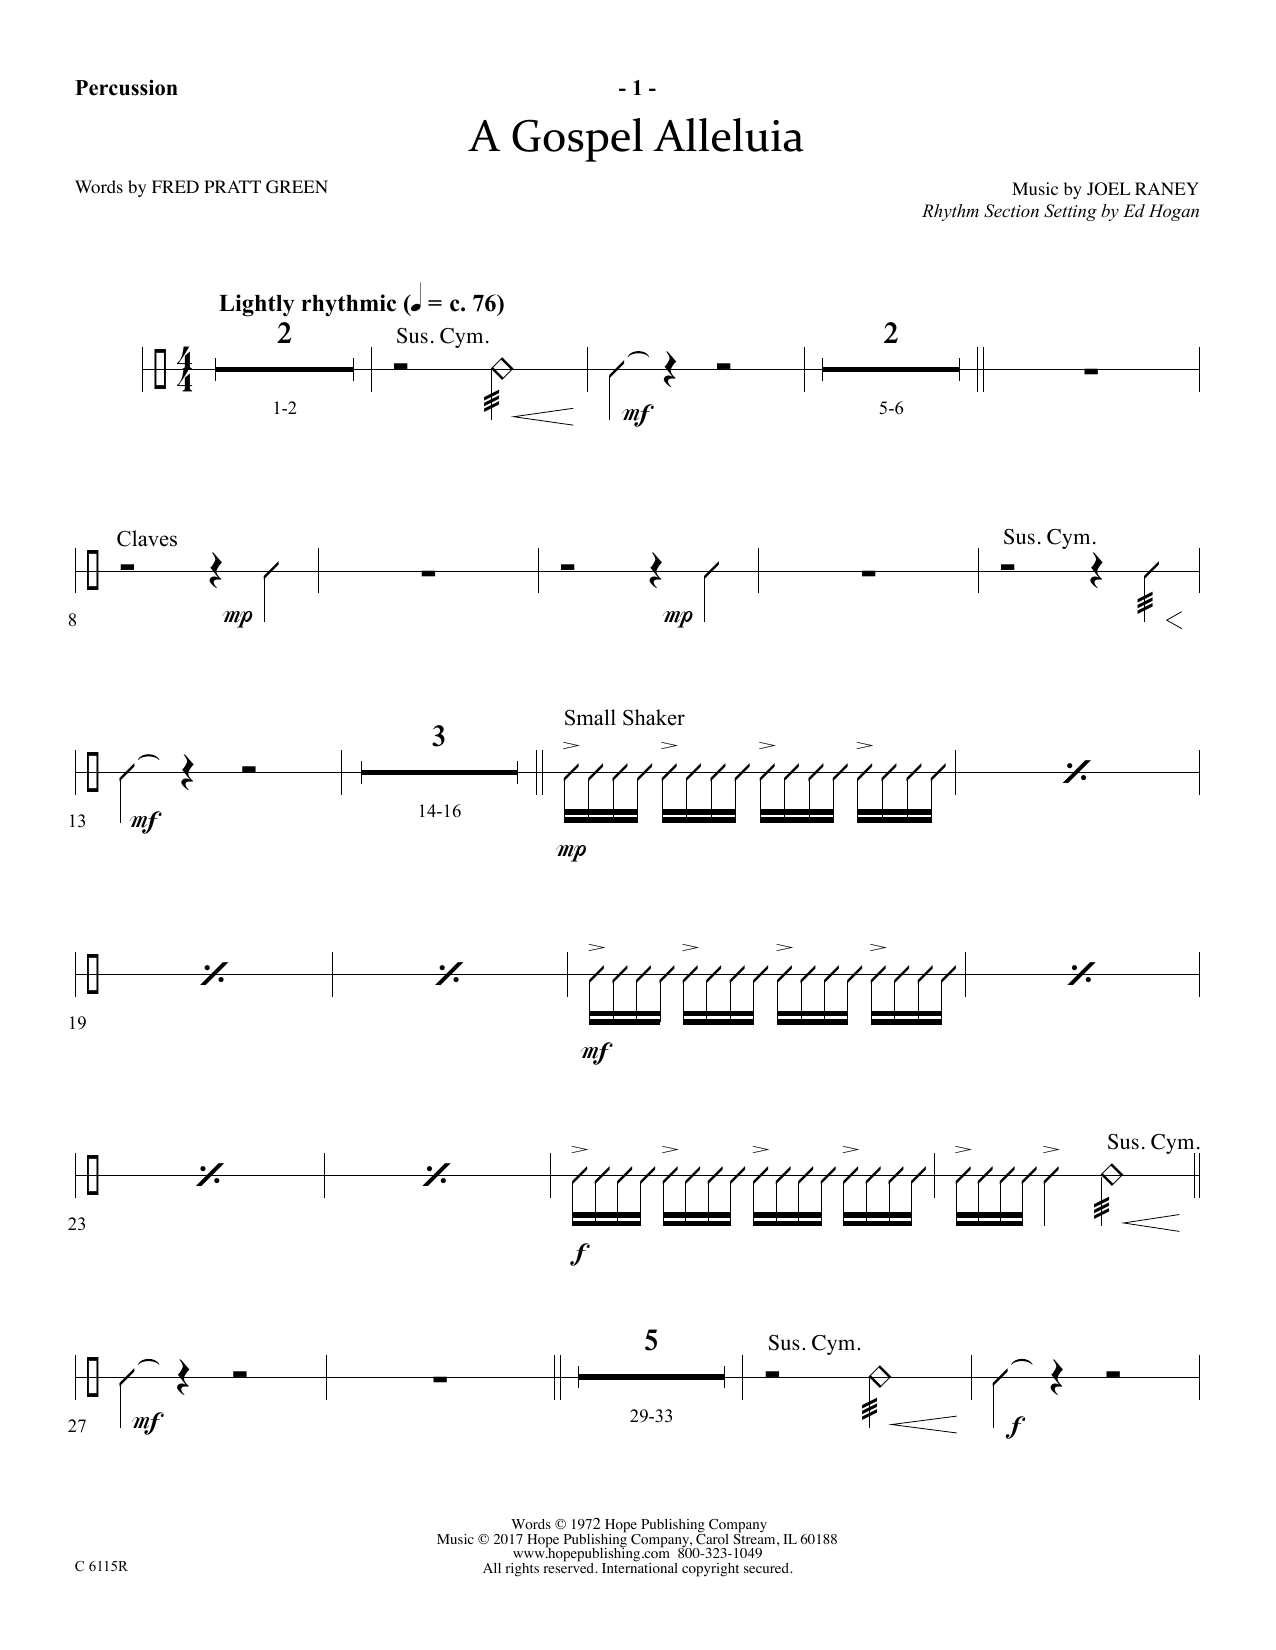 Download Ed Hogan A Gospel Alleluia - Percussion Sheet Music